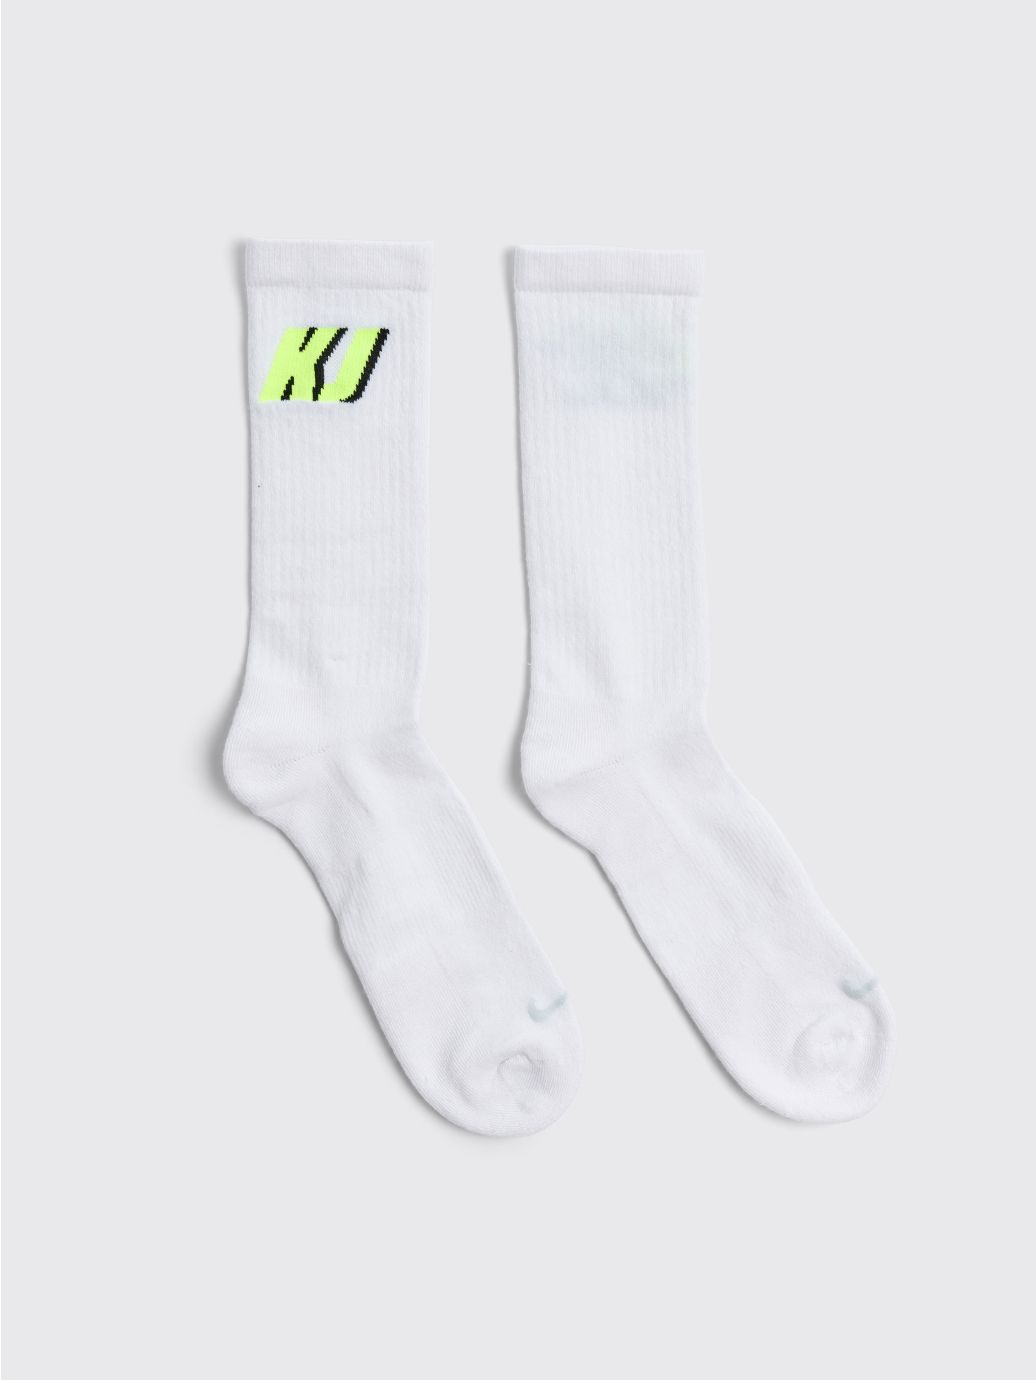 tres-bien.com | Nike x Kim Jones Heritage Crew Socks